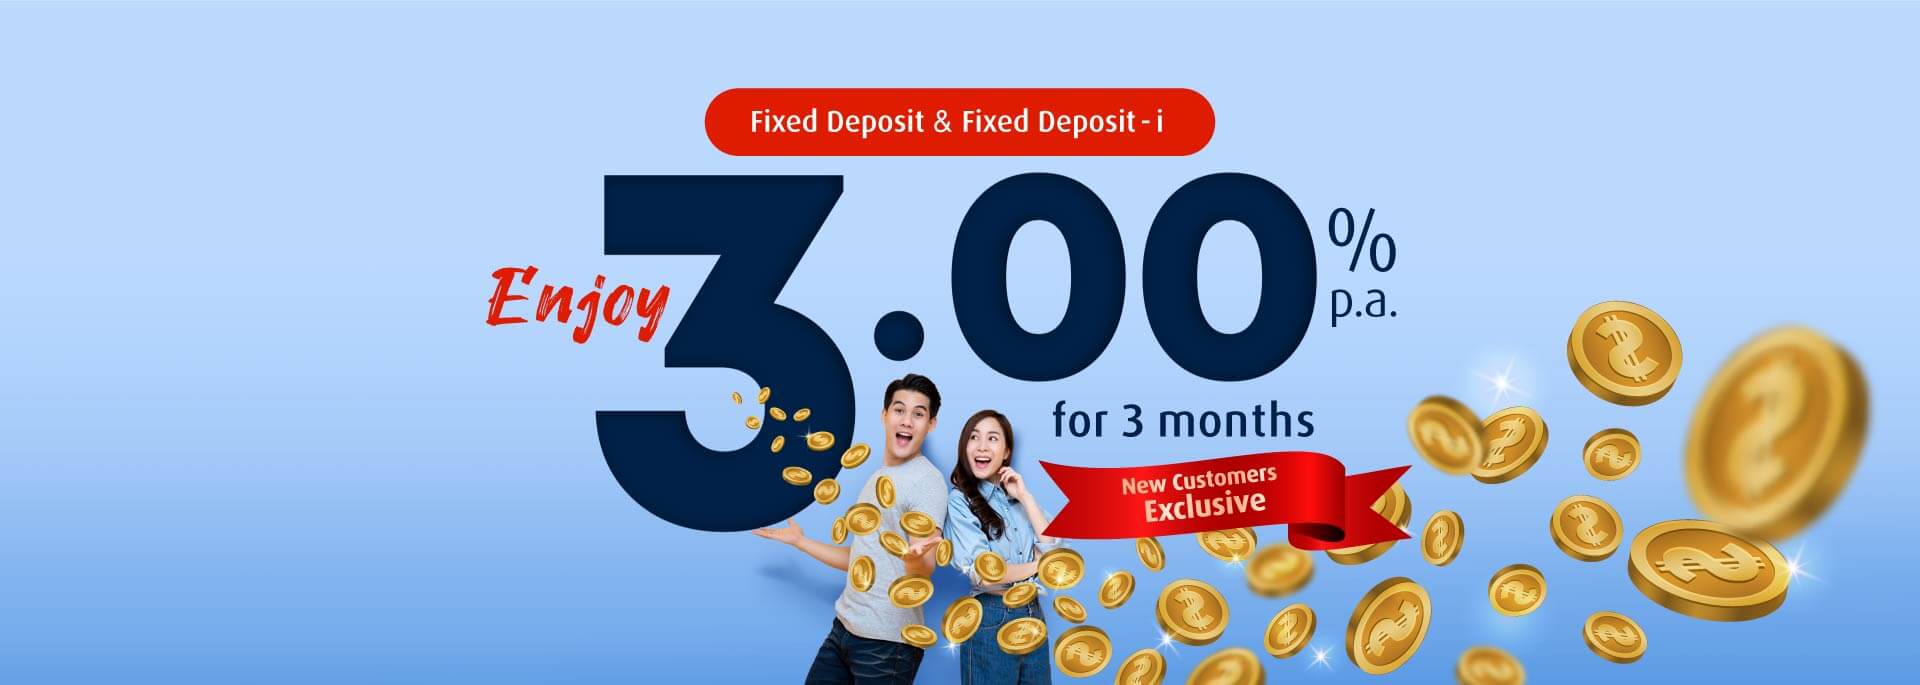 rhb singapore fixed deposit promotion